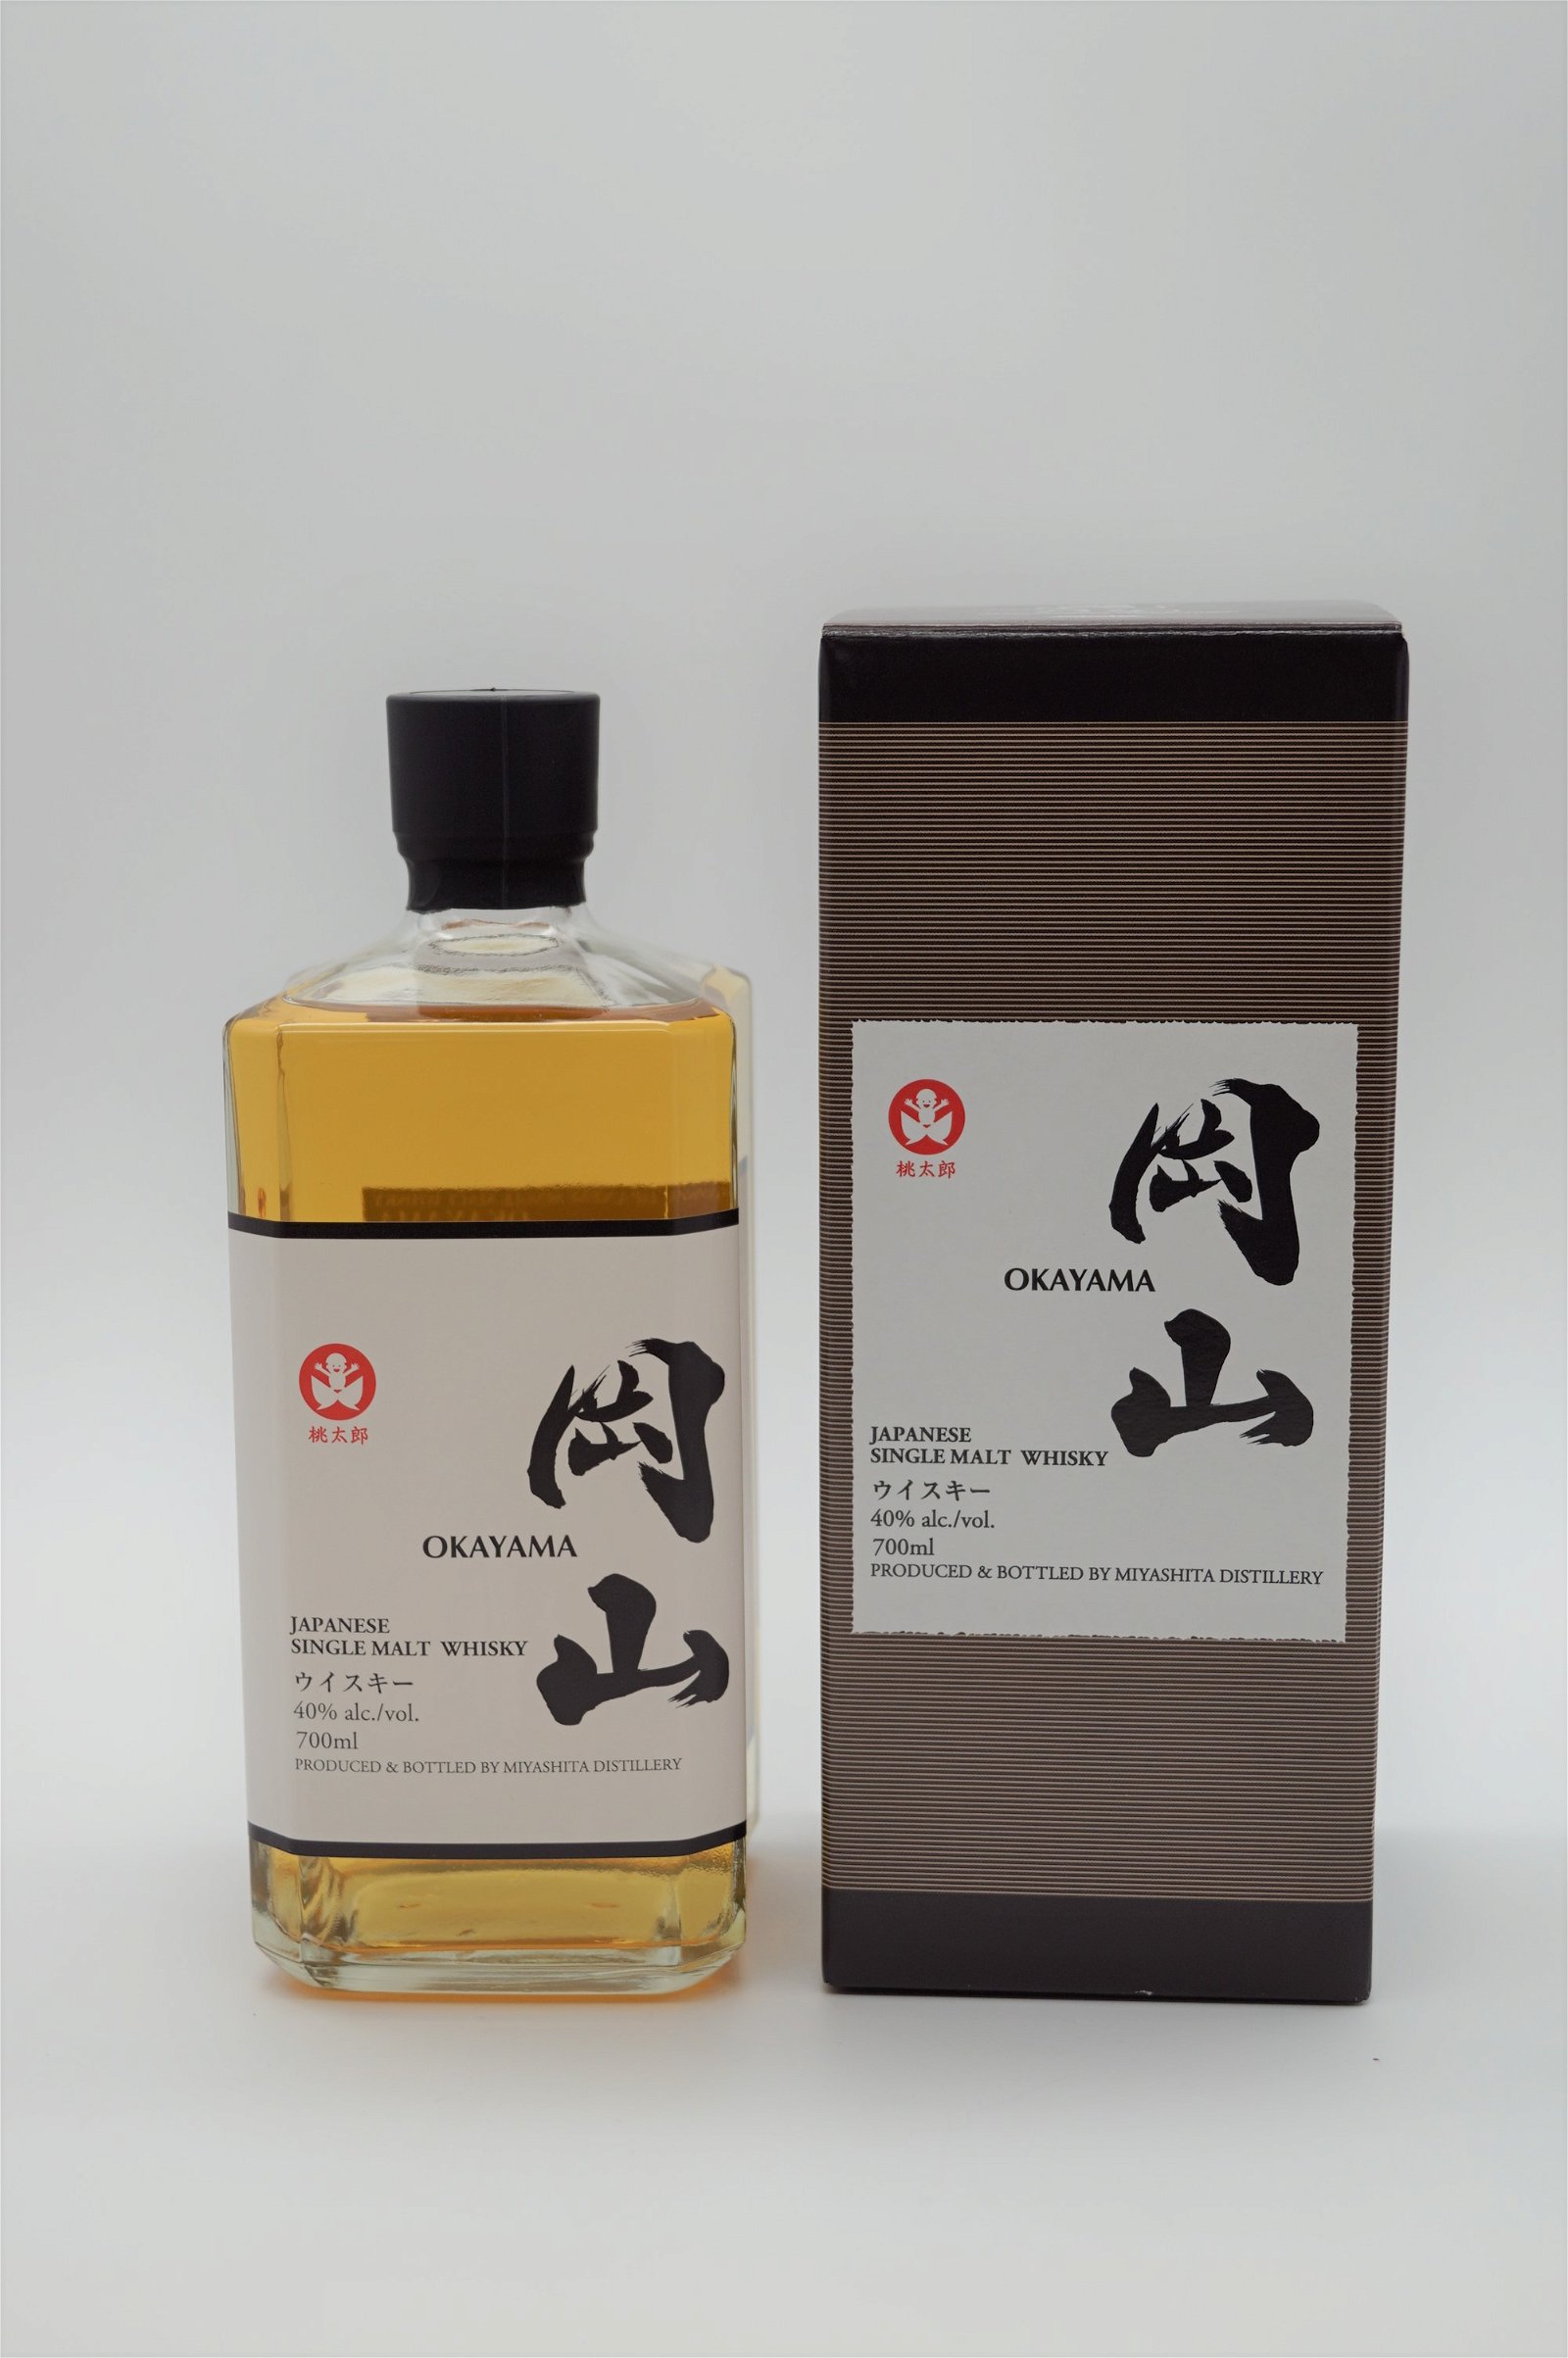 Okayama Japanese Single Malt Whisky